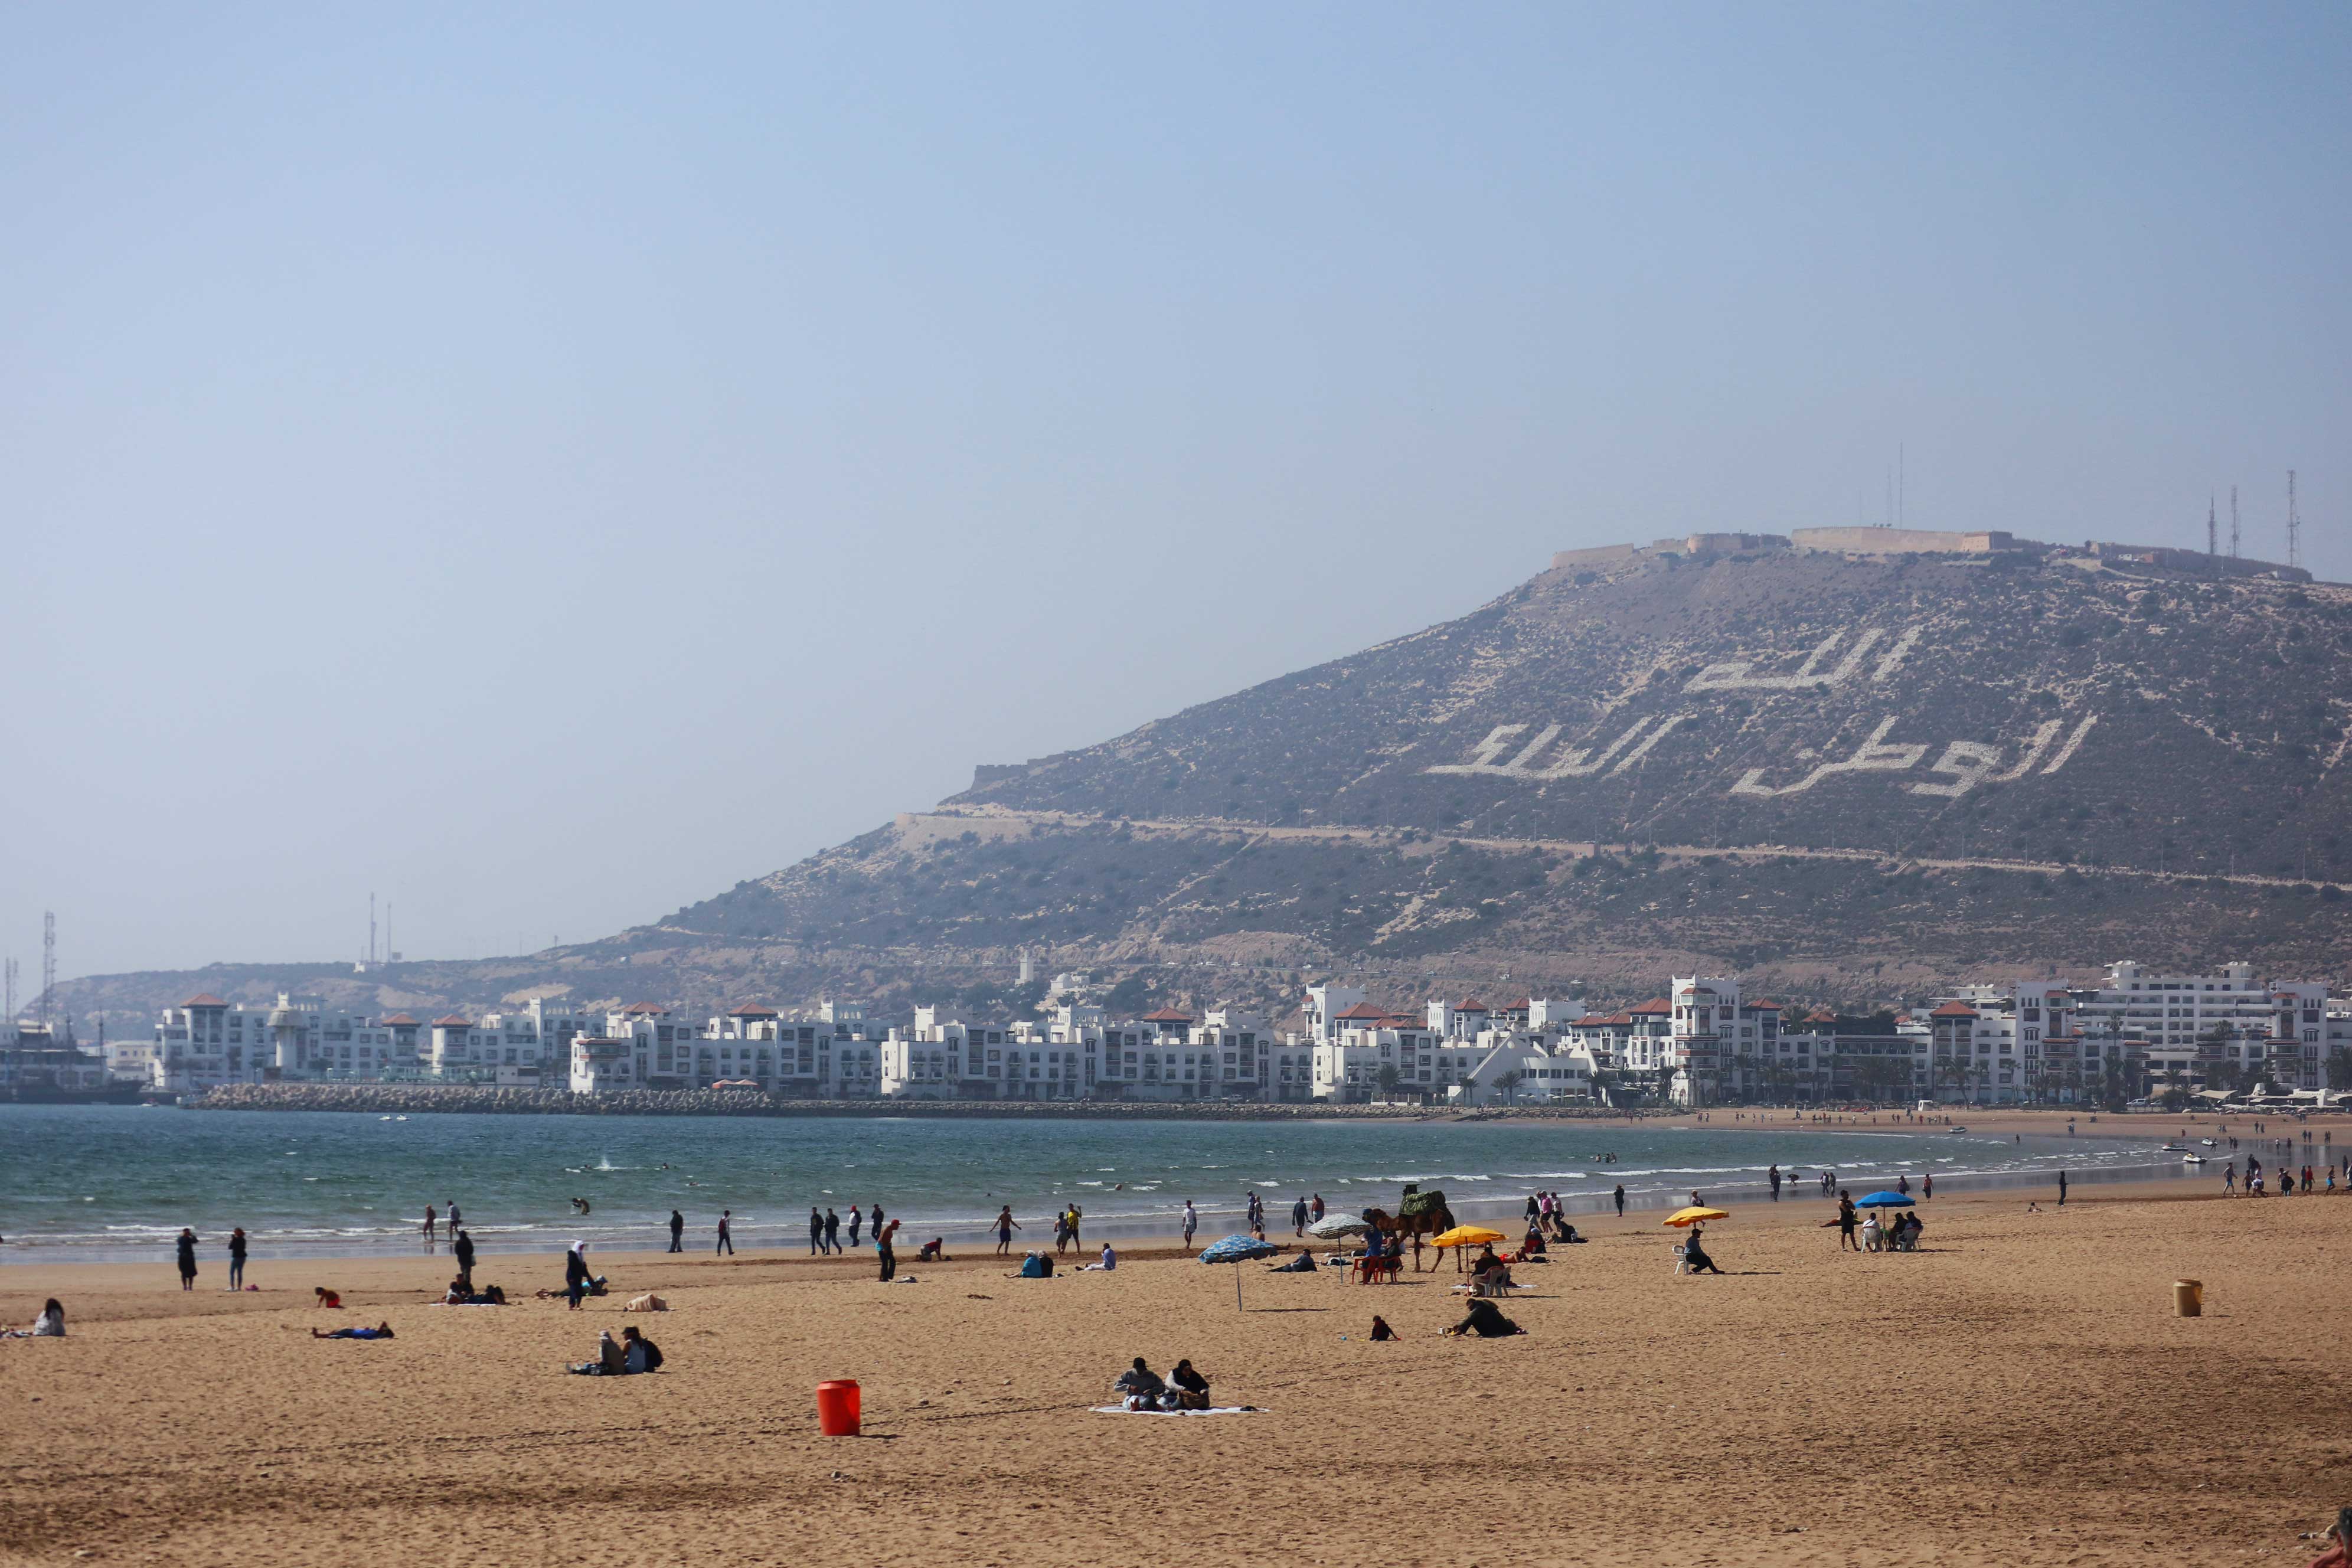 View from the beach in Agadir